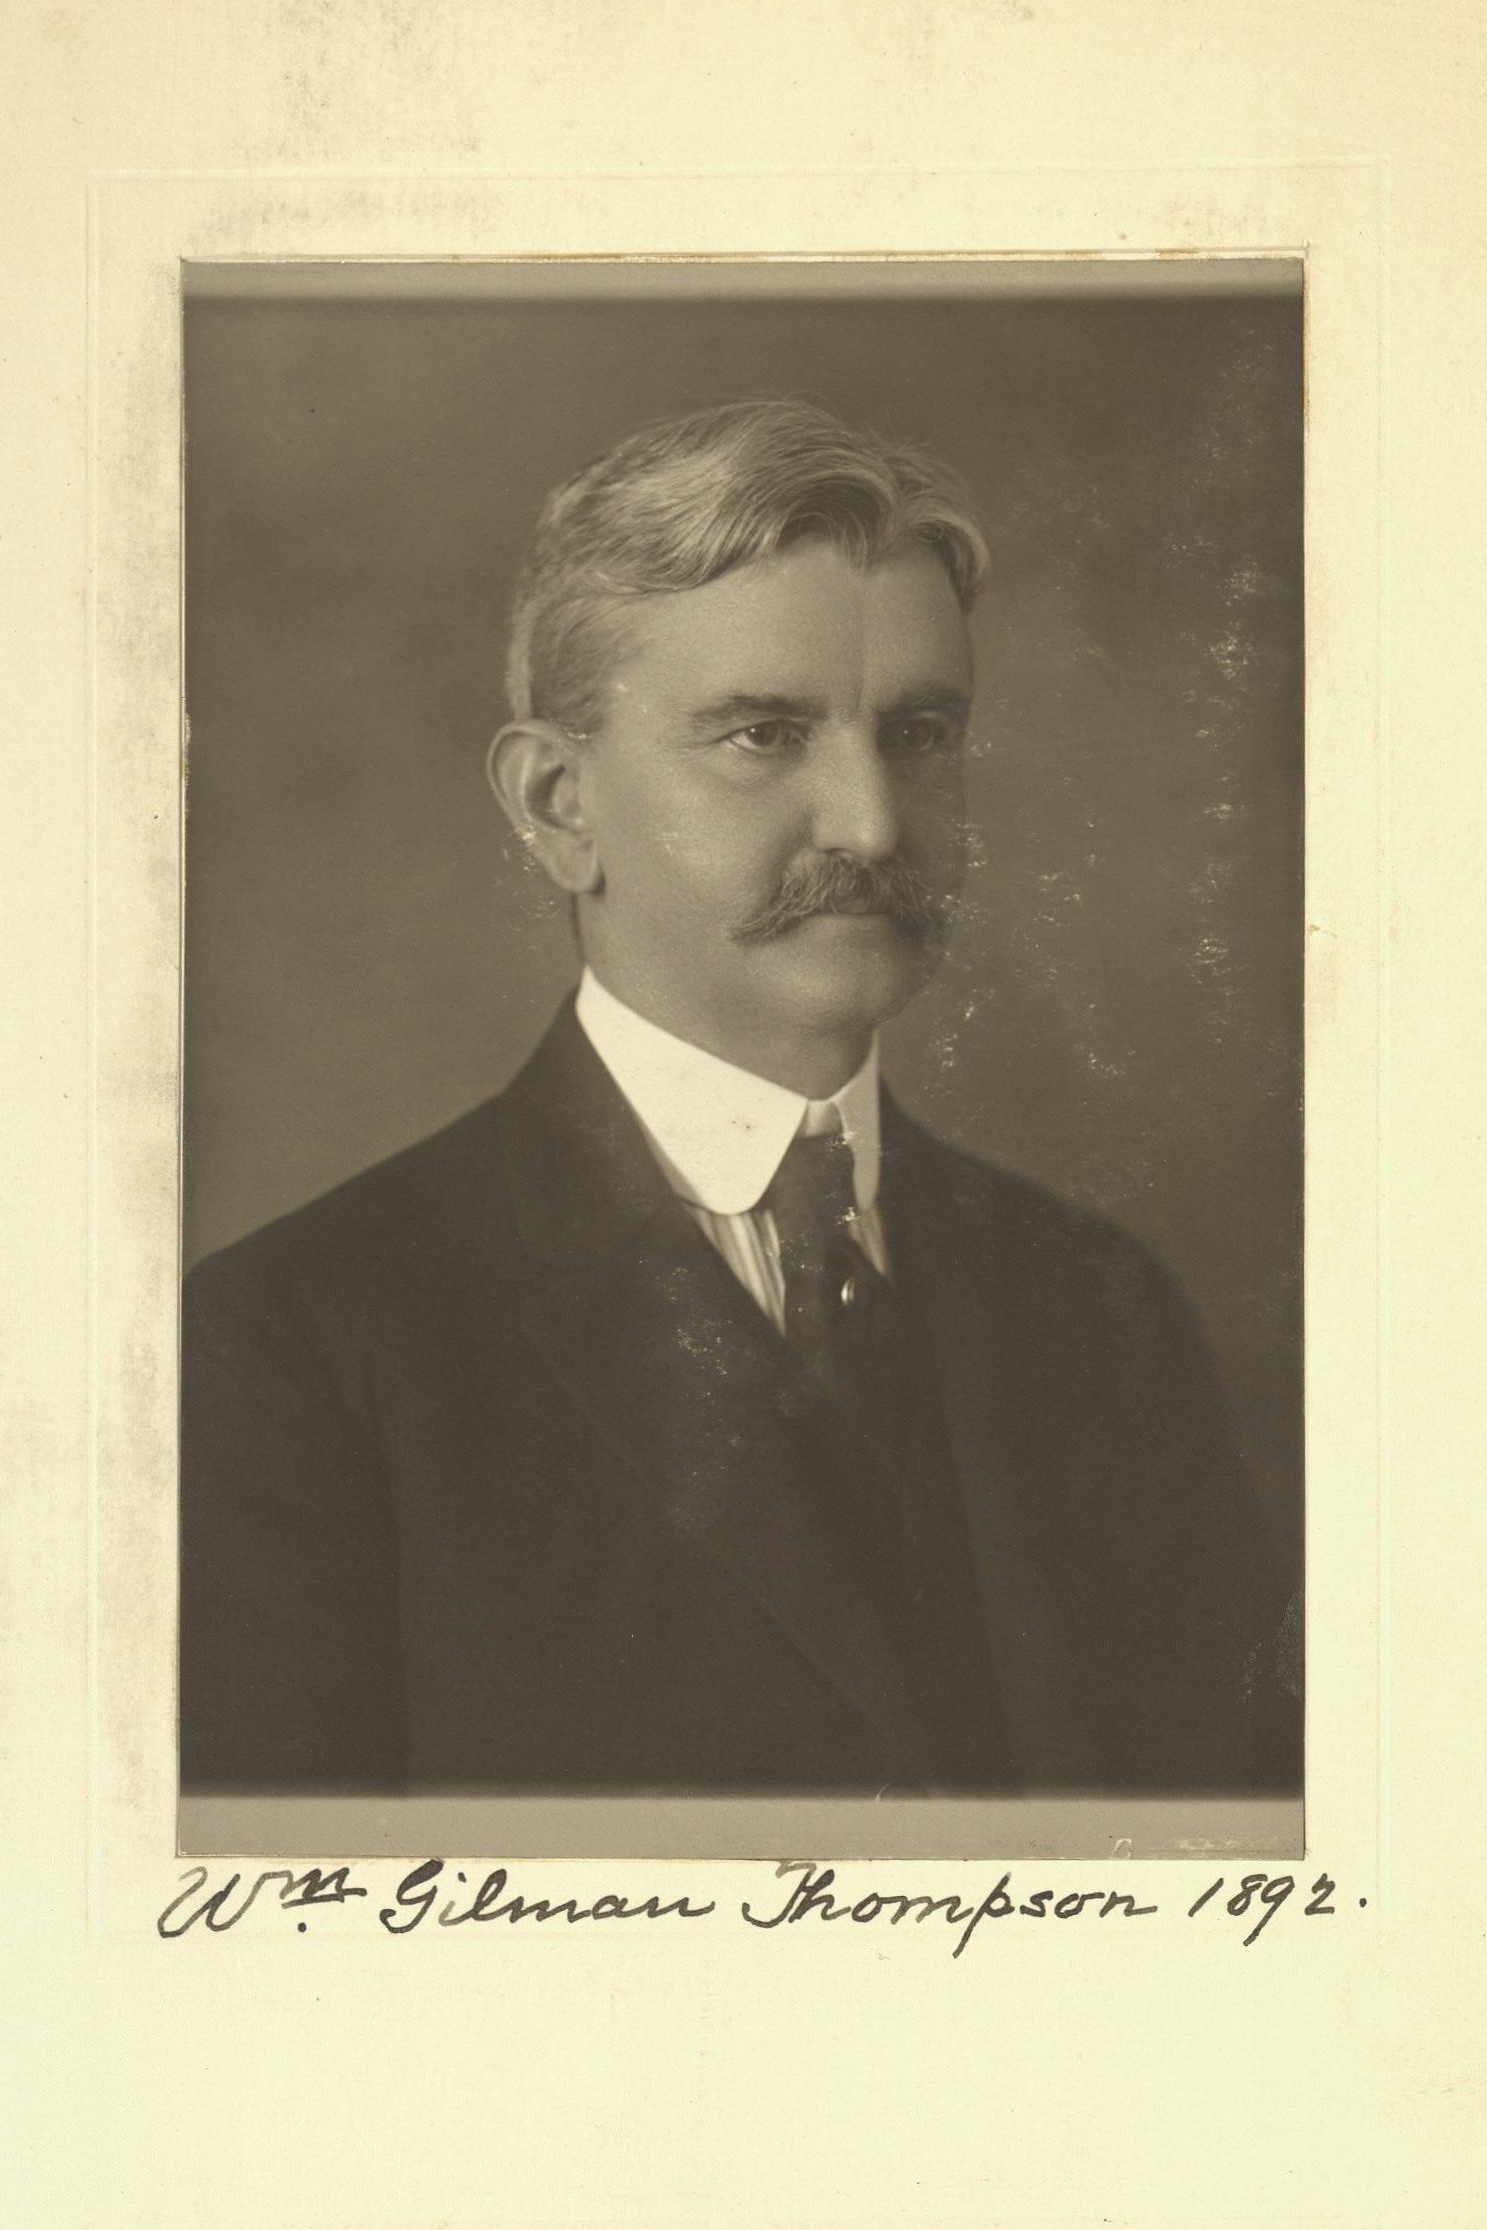 Member portrait of William Gilman Thompson